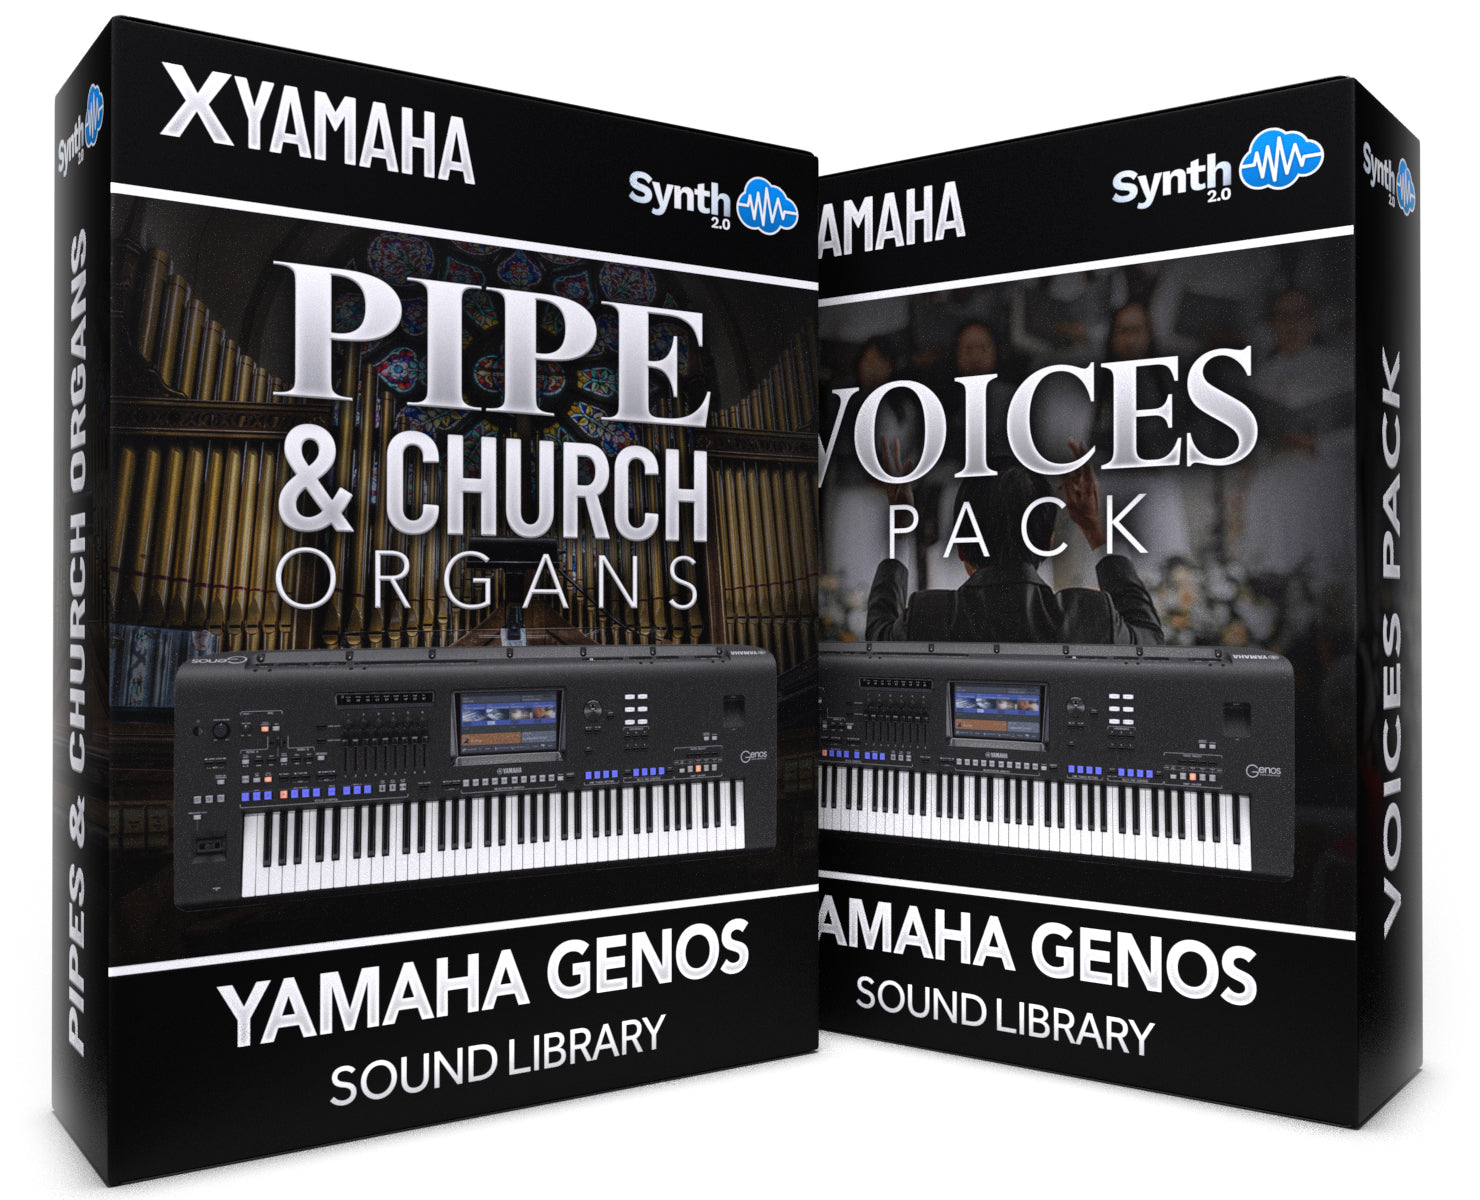 GNL009 - ( Bundle ) - Pipe & Church Organs + Voices Pack - Yamaha GENOS / 2